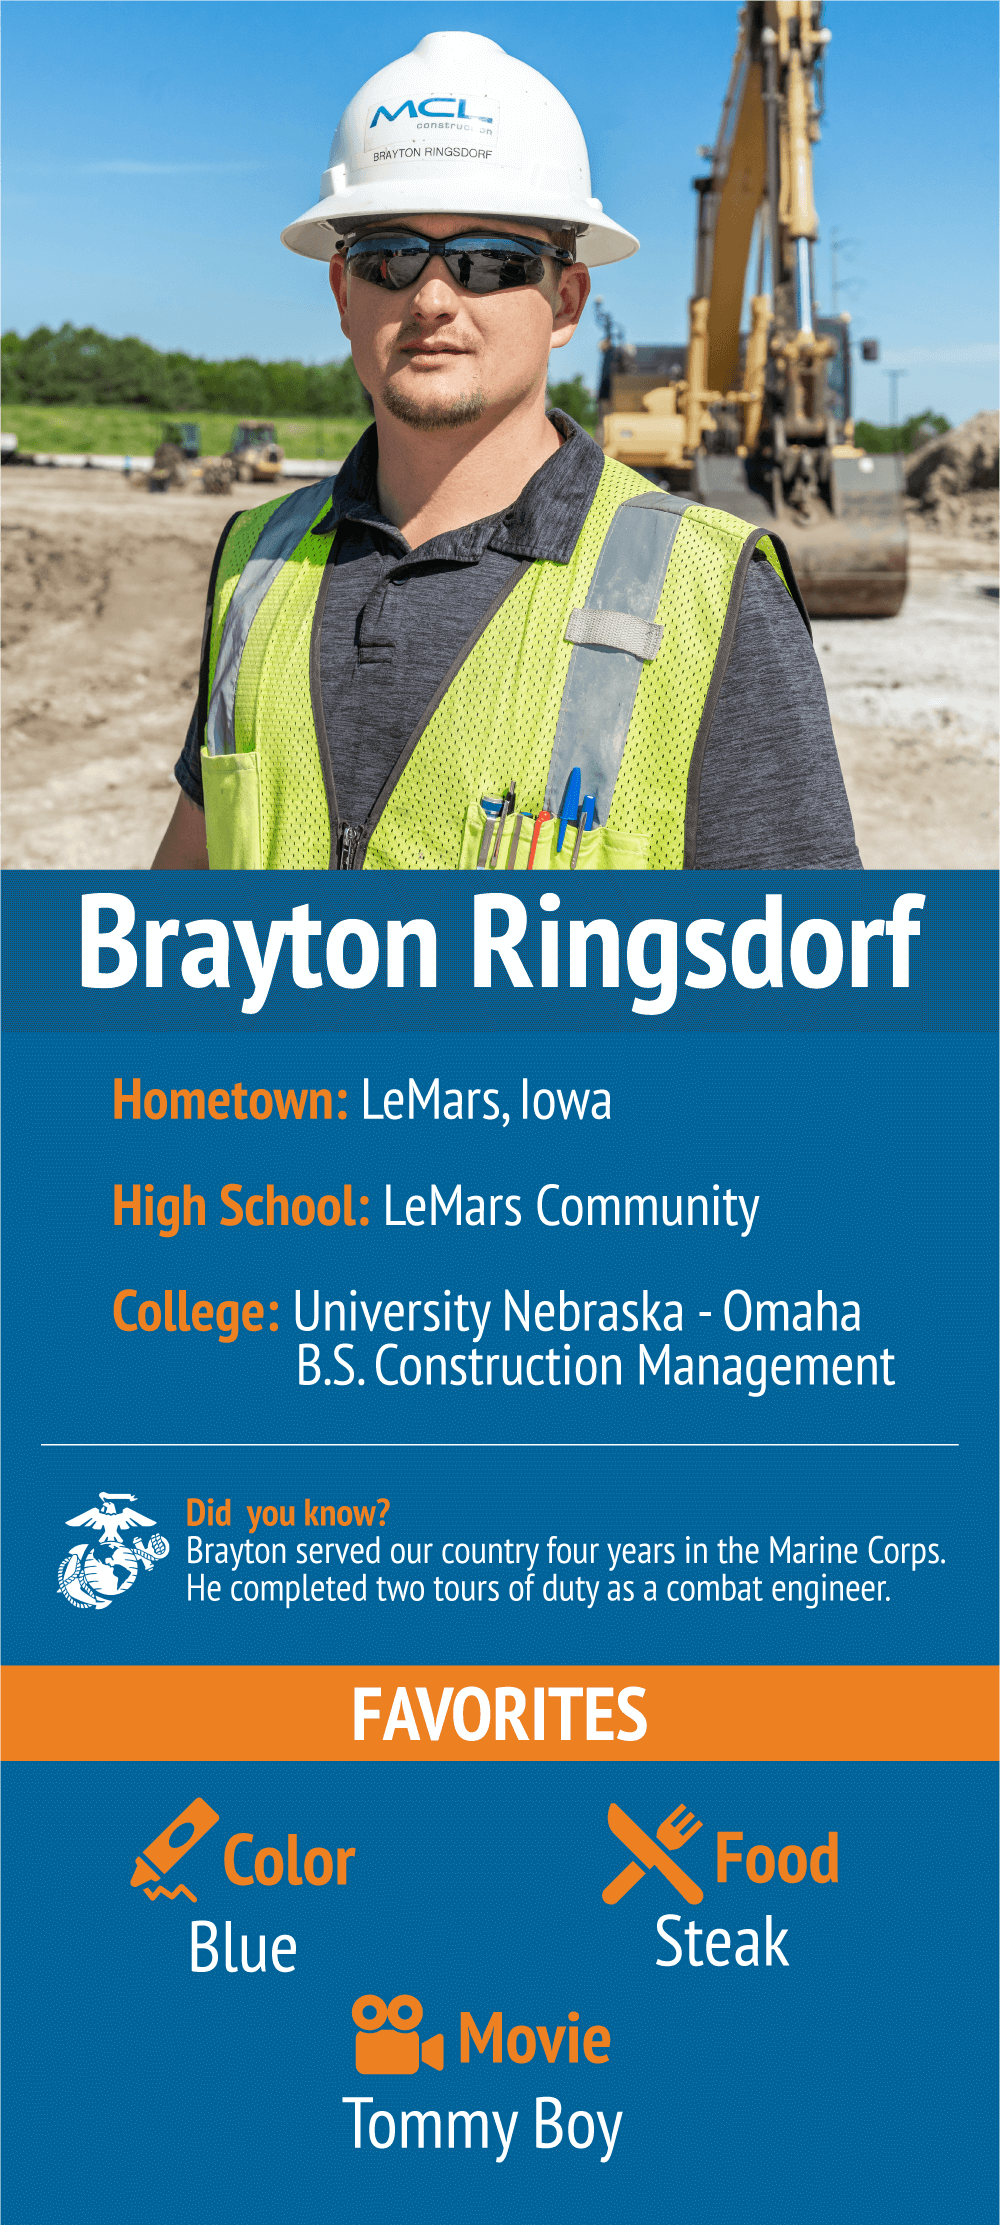 Brayton Ringsdorf MCL Construction